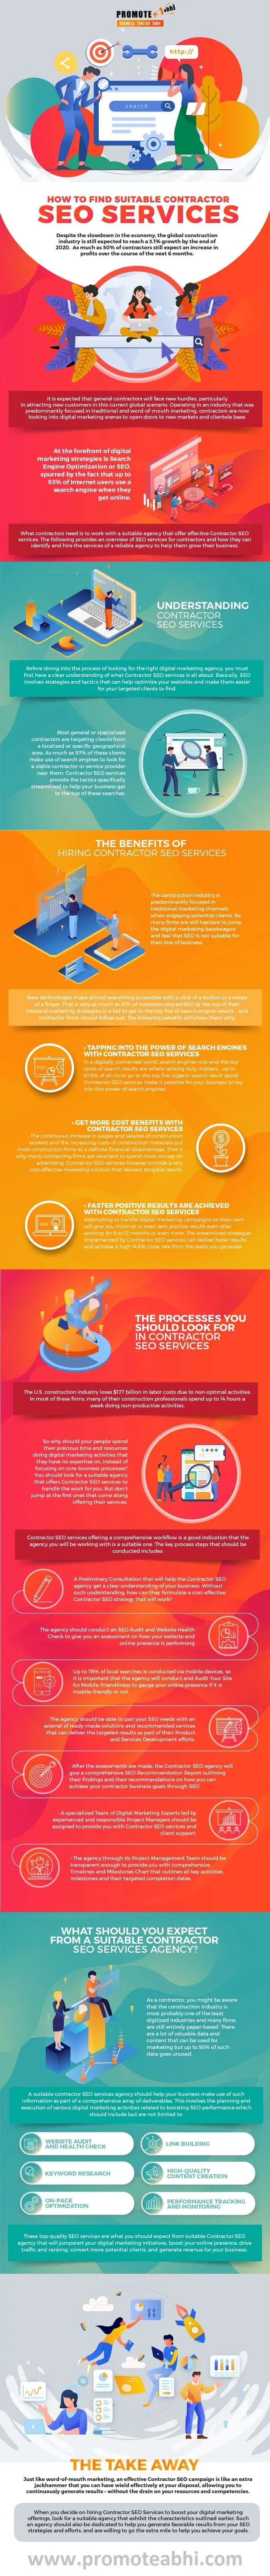 SEO Services Process Infographic - Promote Abhi